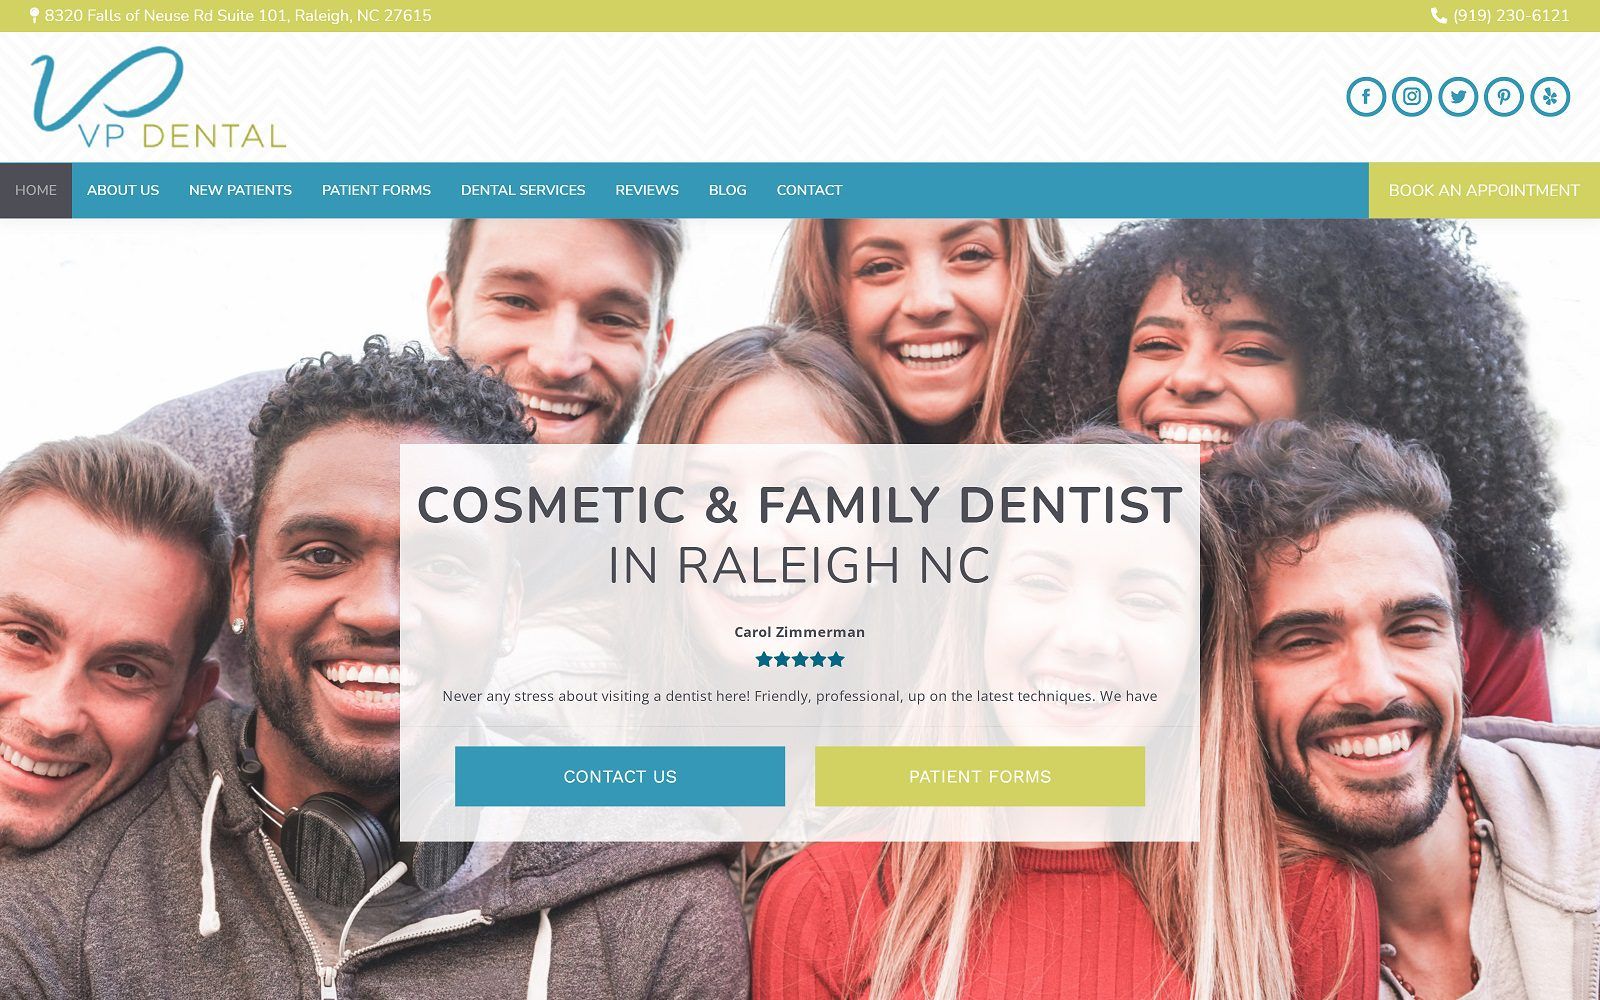 The Screenshot of VP Dental: Cosmetic & Family Dentist Dr. Preston Website